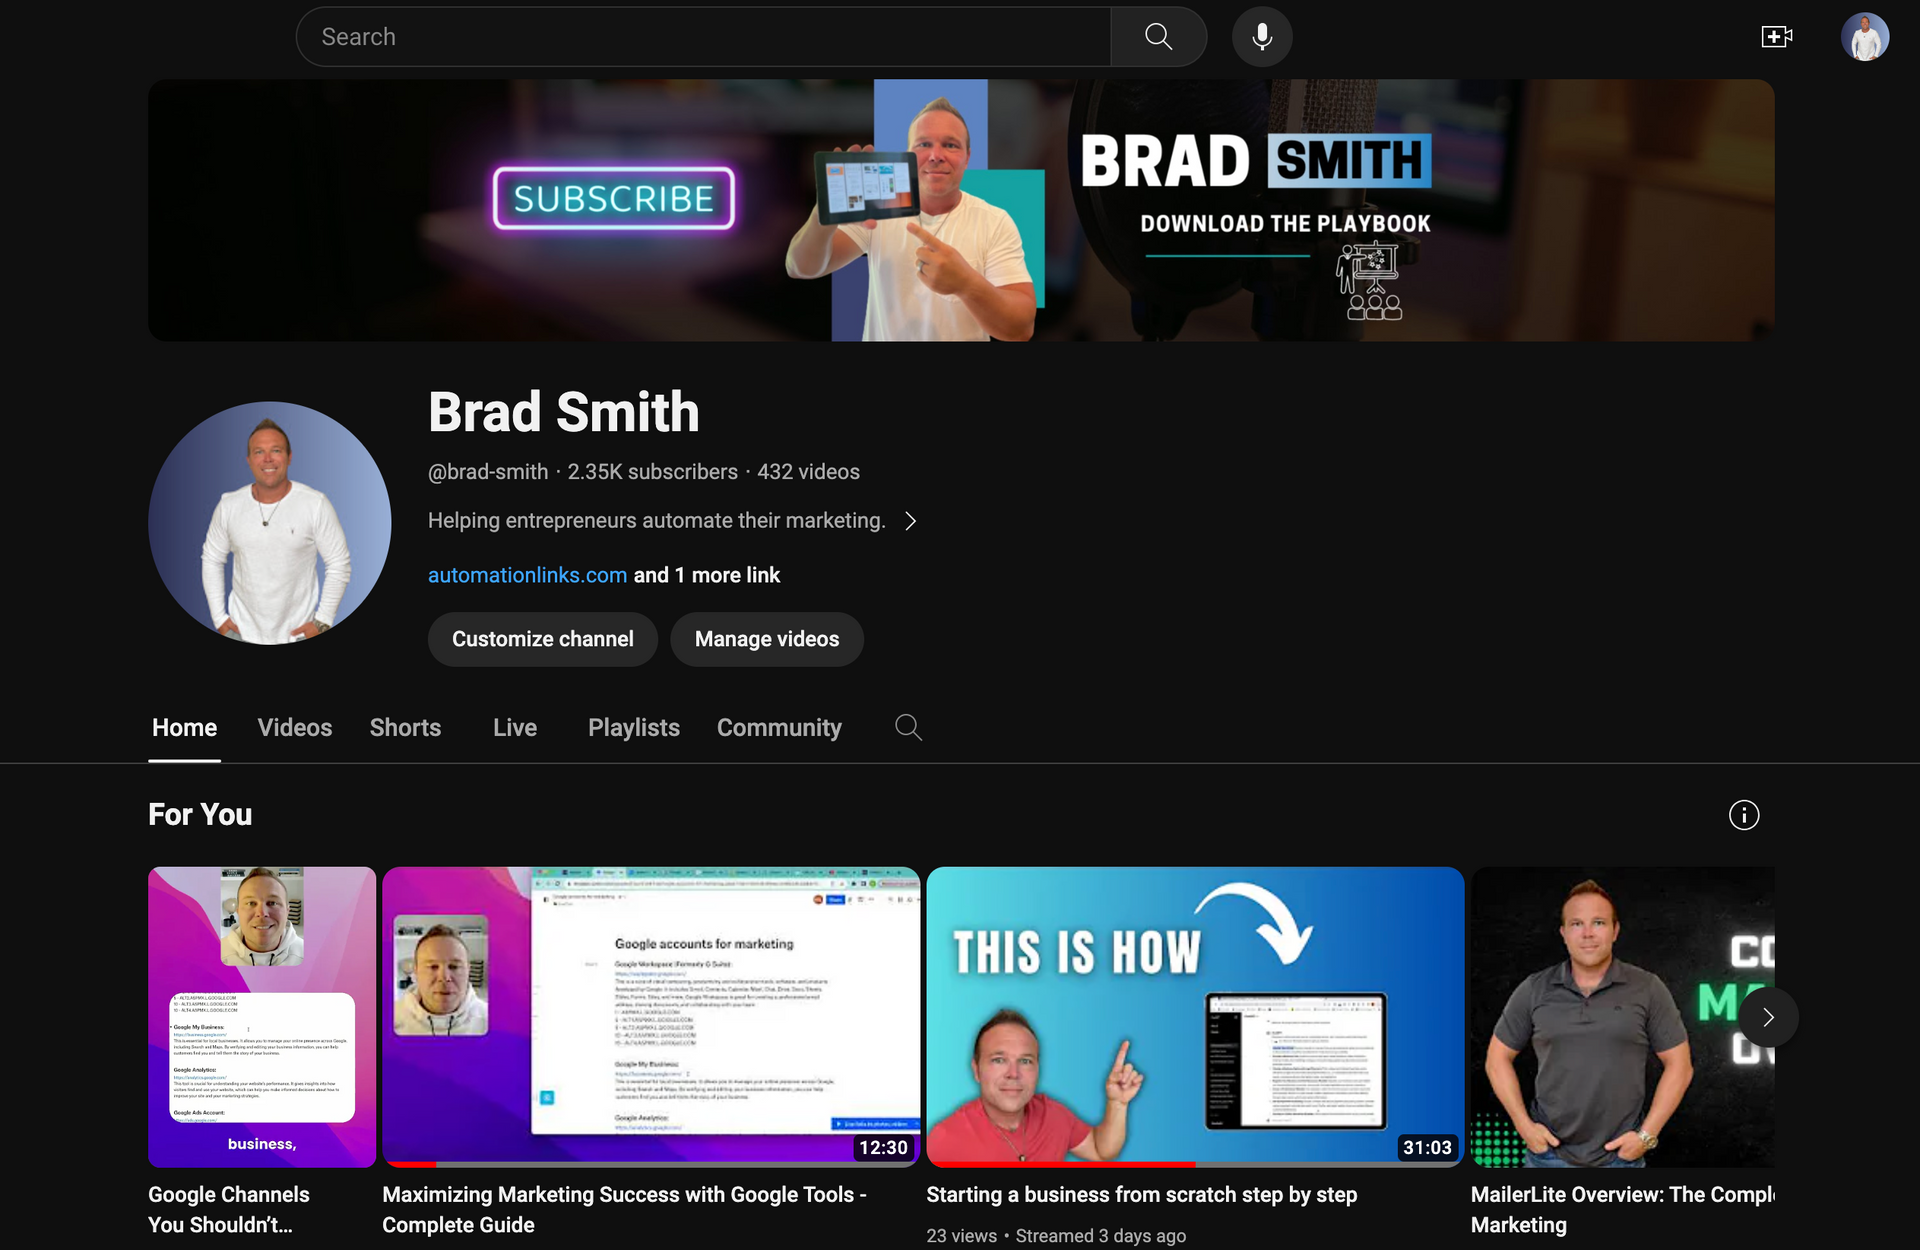 YouTube Channel Brad Smith